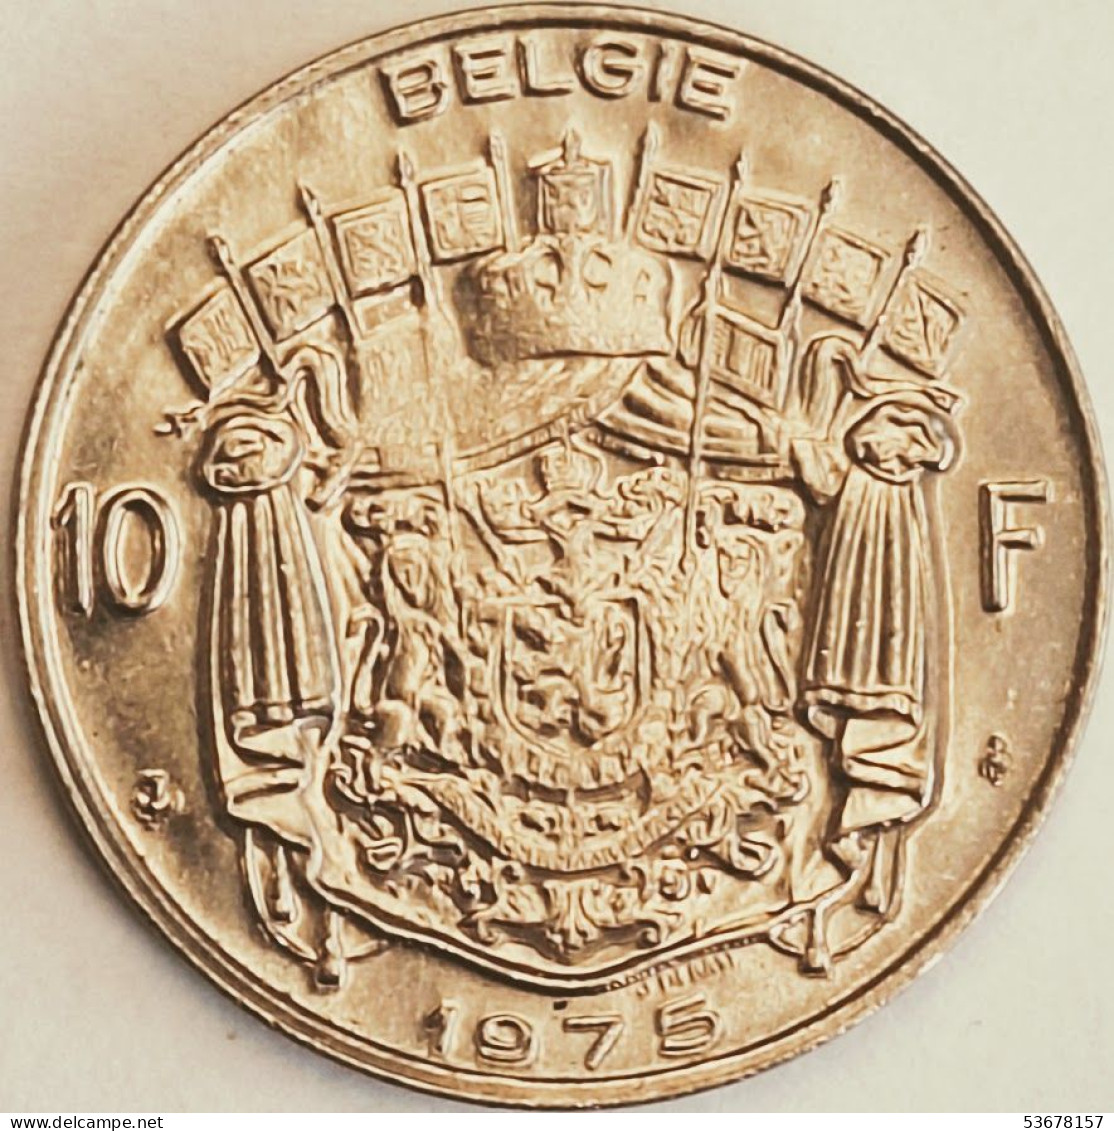 Belgium - 10 Francs 1975, KM# 156.1 (#3199) - 10 Frank